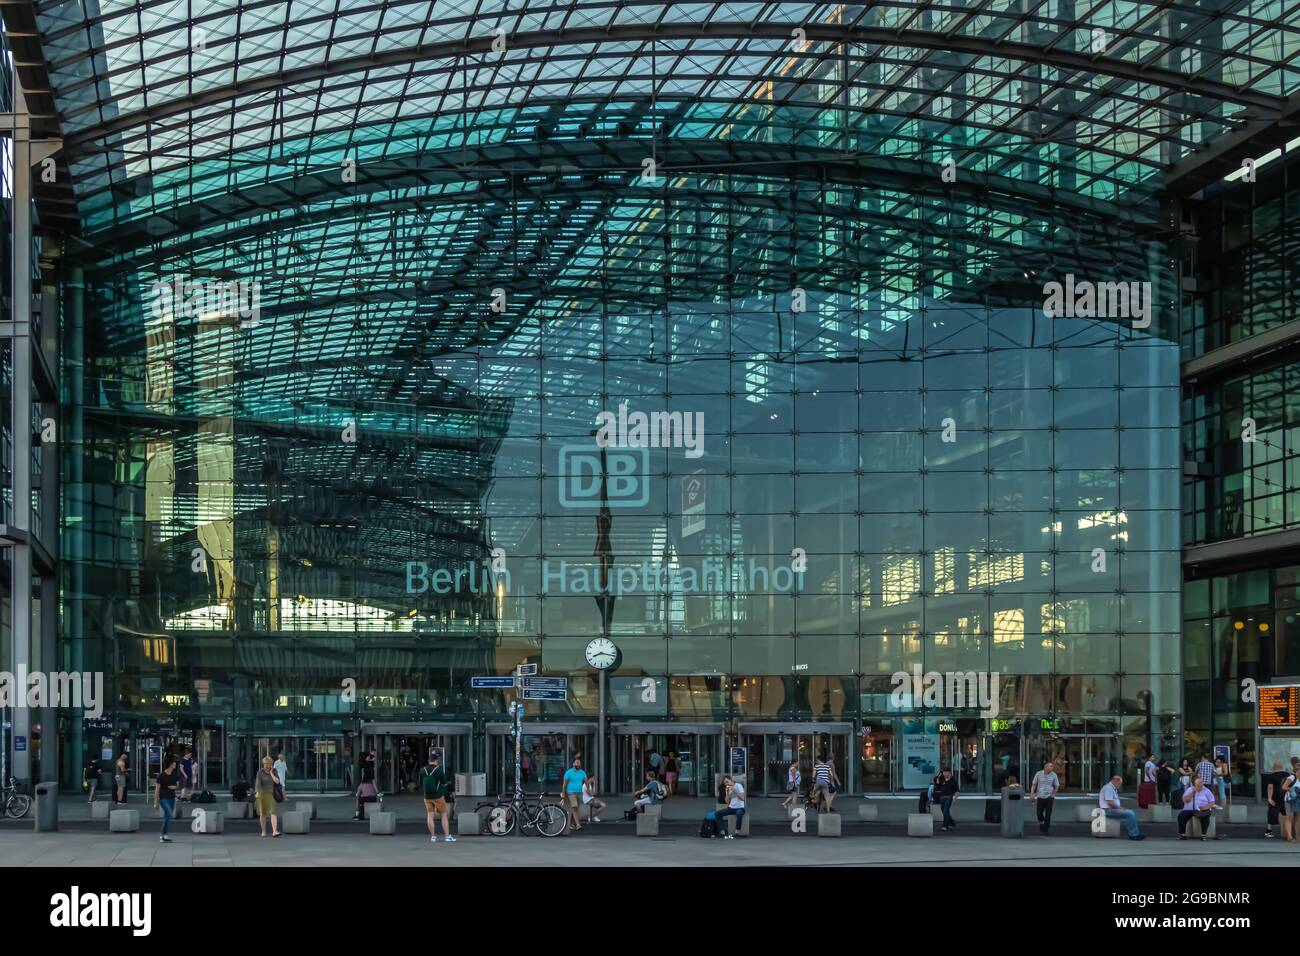 Berlin, Allemagne - 25 juillet 2019 : gare centrale de Berlin. Berlin - Hauptbahnhof. Architecture moderne en verre Banque D'Images